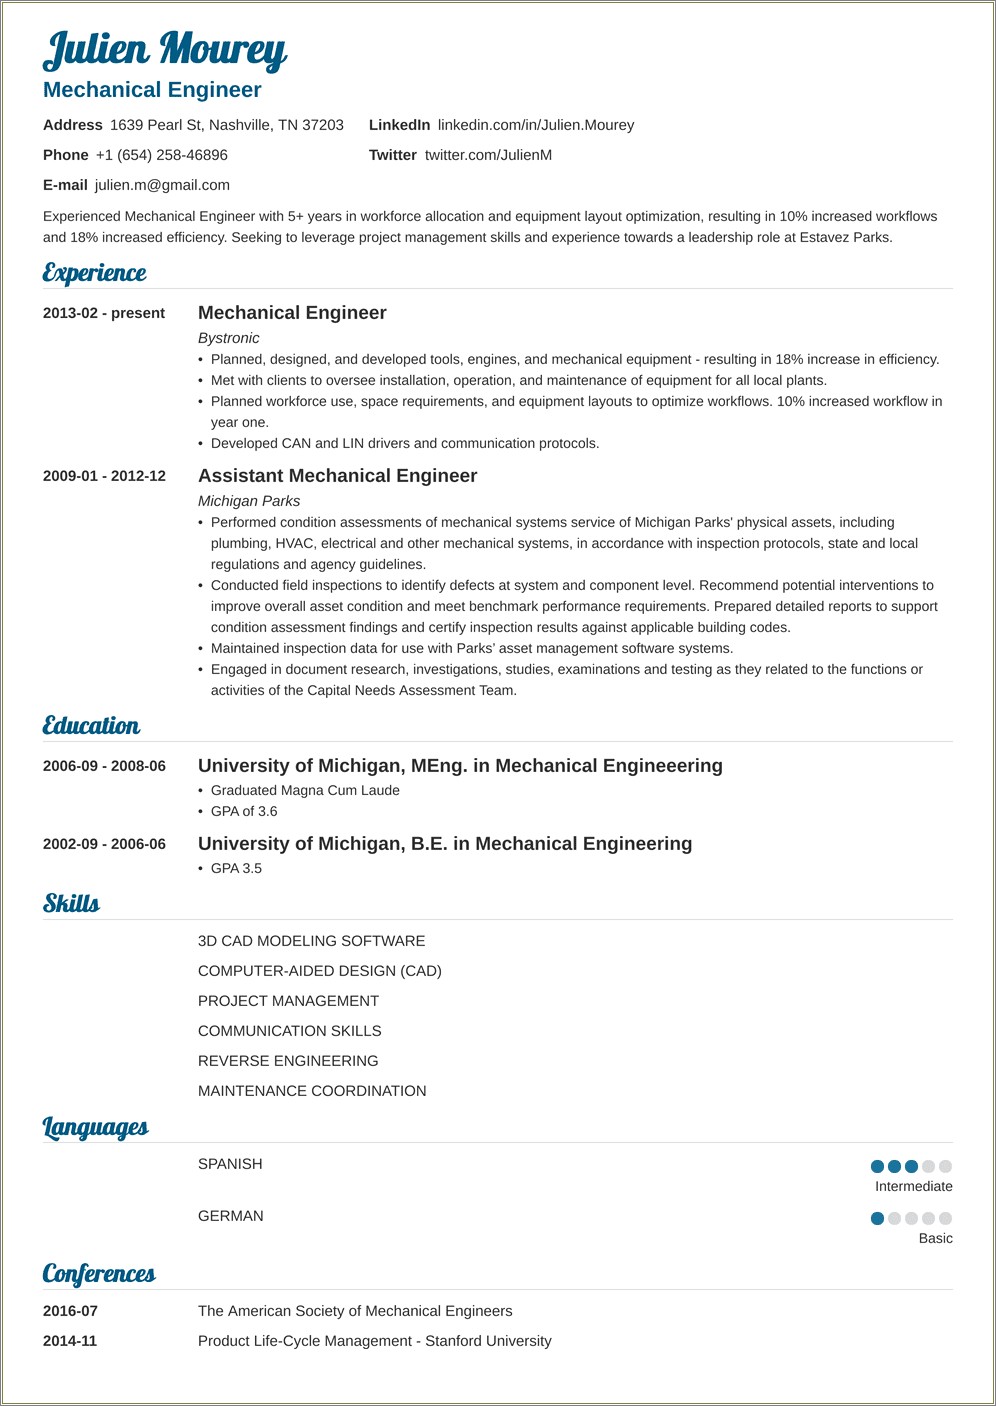 Sample Resume For Mechanical Engineer Fresh Graduate Doc